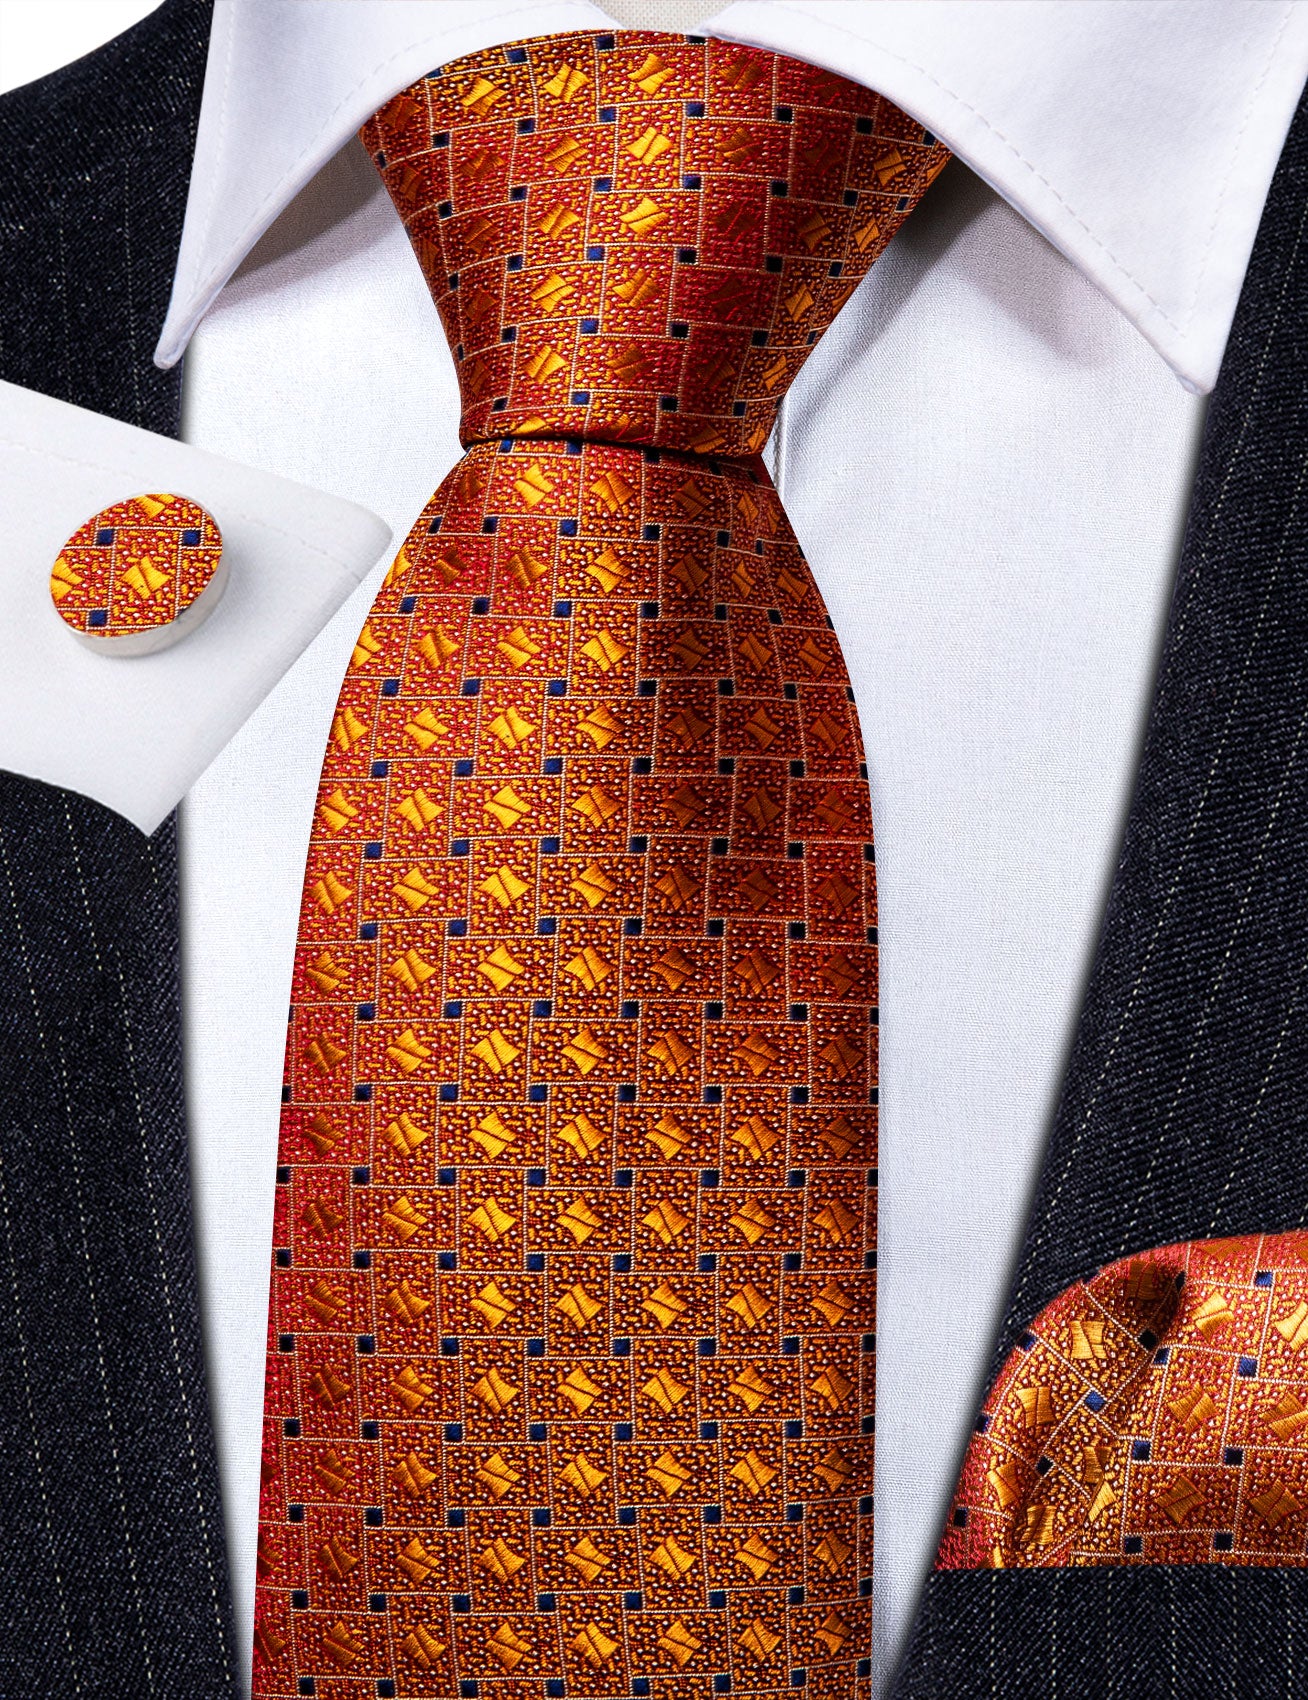 Barry.wang Orange Tie Novelty Blue Plaid Silk Tie Pocket Square Cufflinks Set